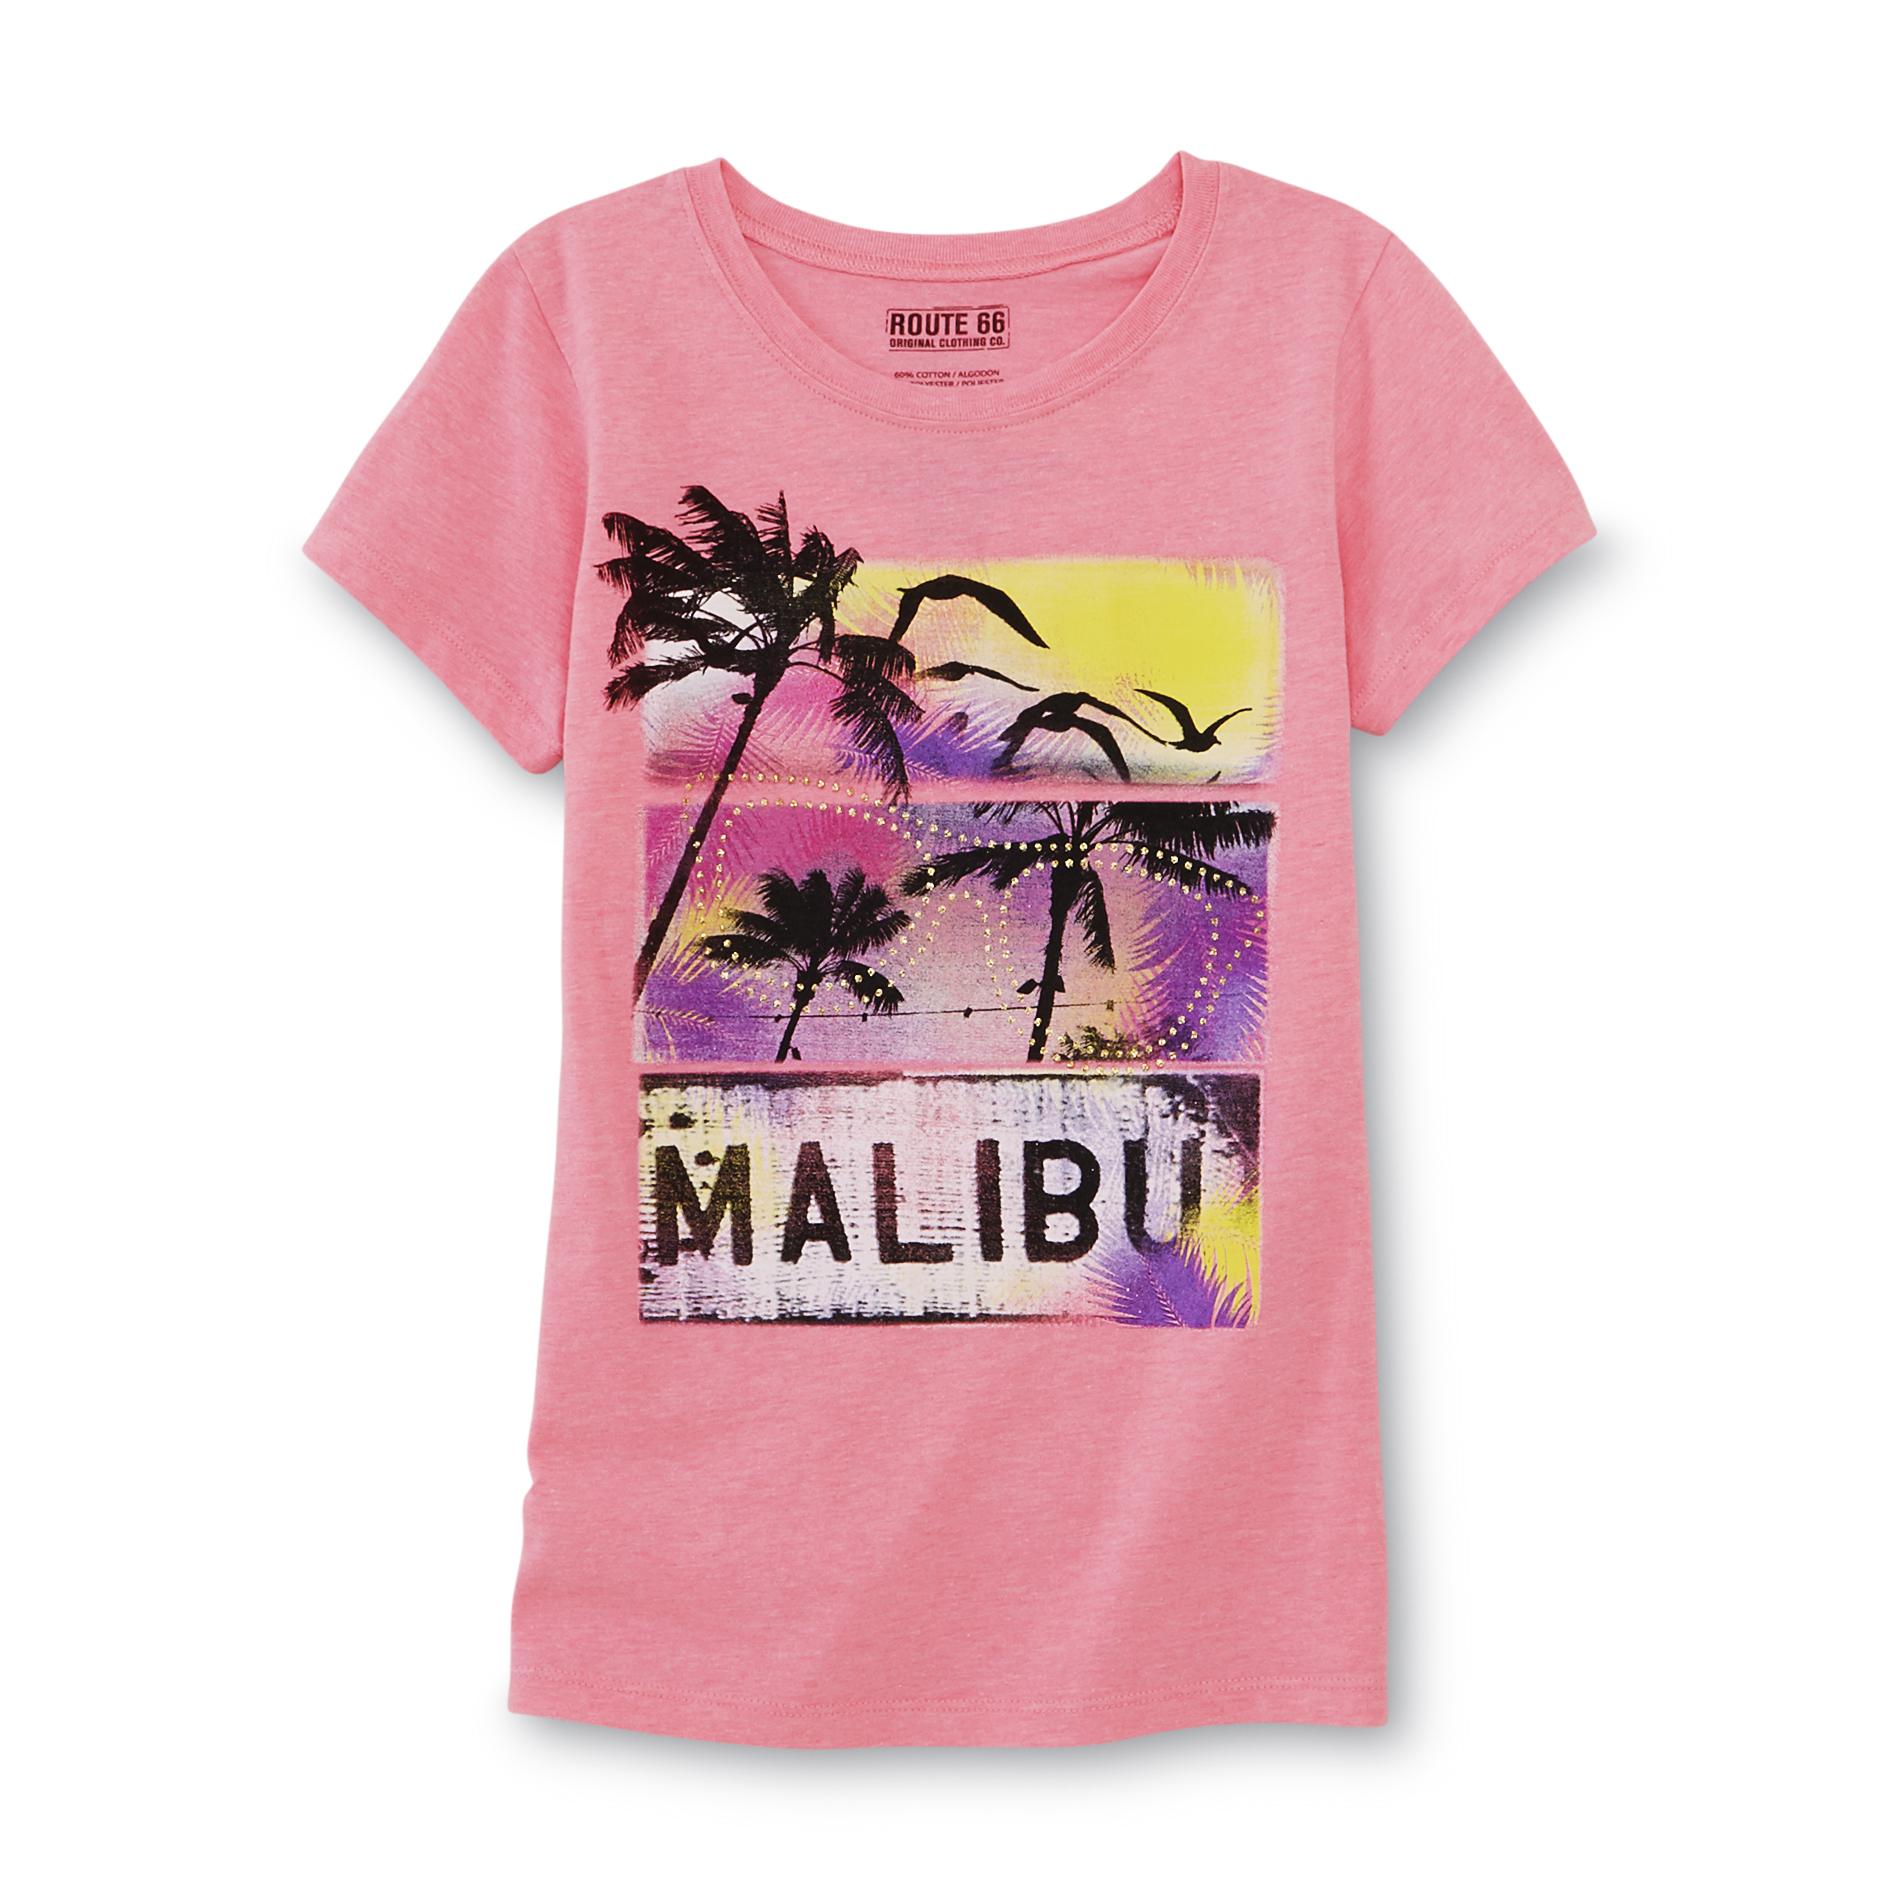 Route 66 Girl's Glitter Graphic T-Shirt - Malibu